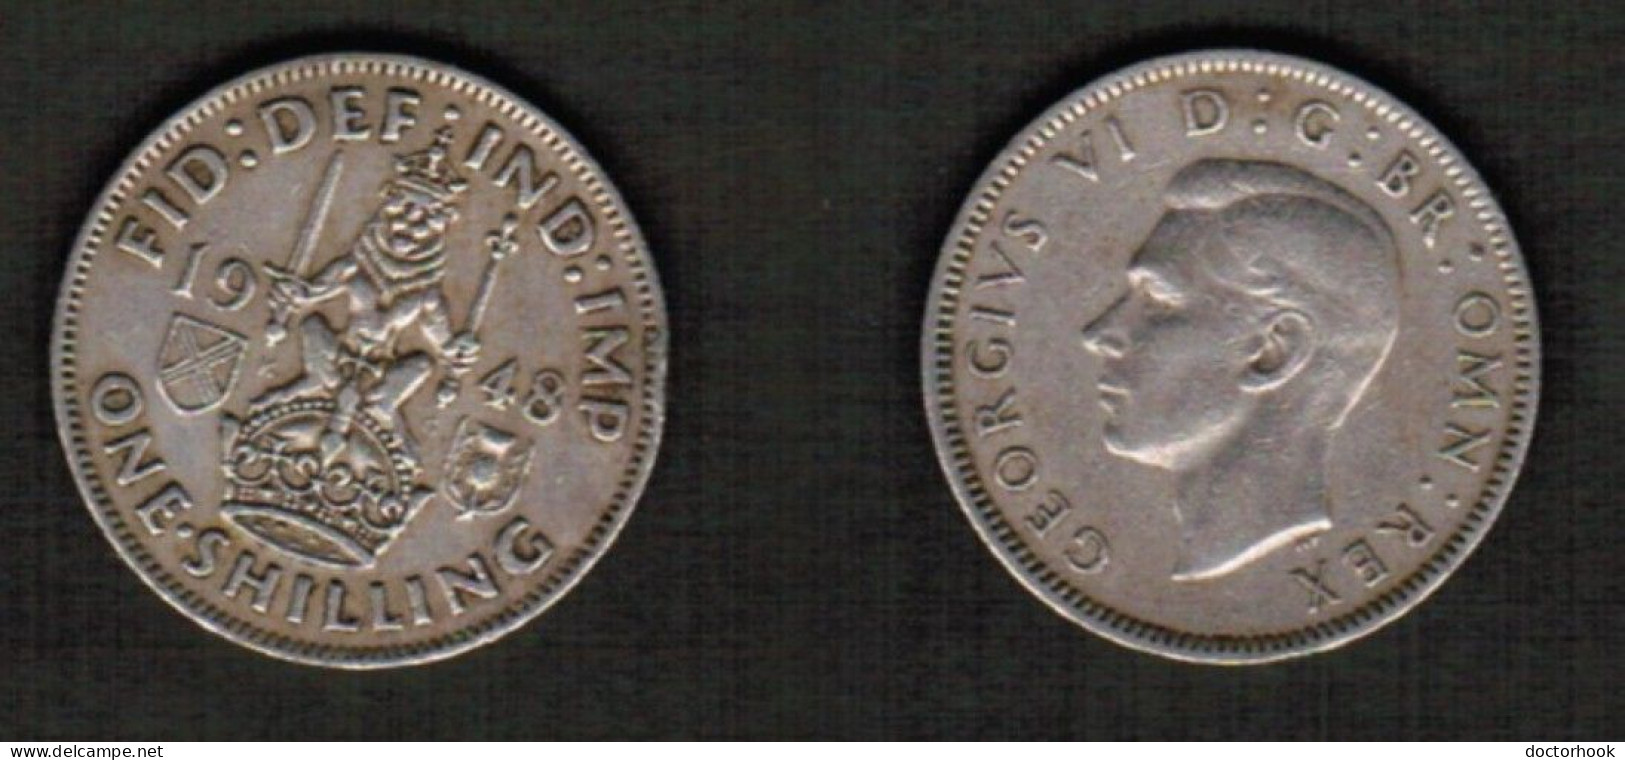 GREAT BRITAIN    1 SHILLING 1948 (KM # 863) #7675 - I. 1 Shilling